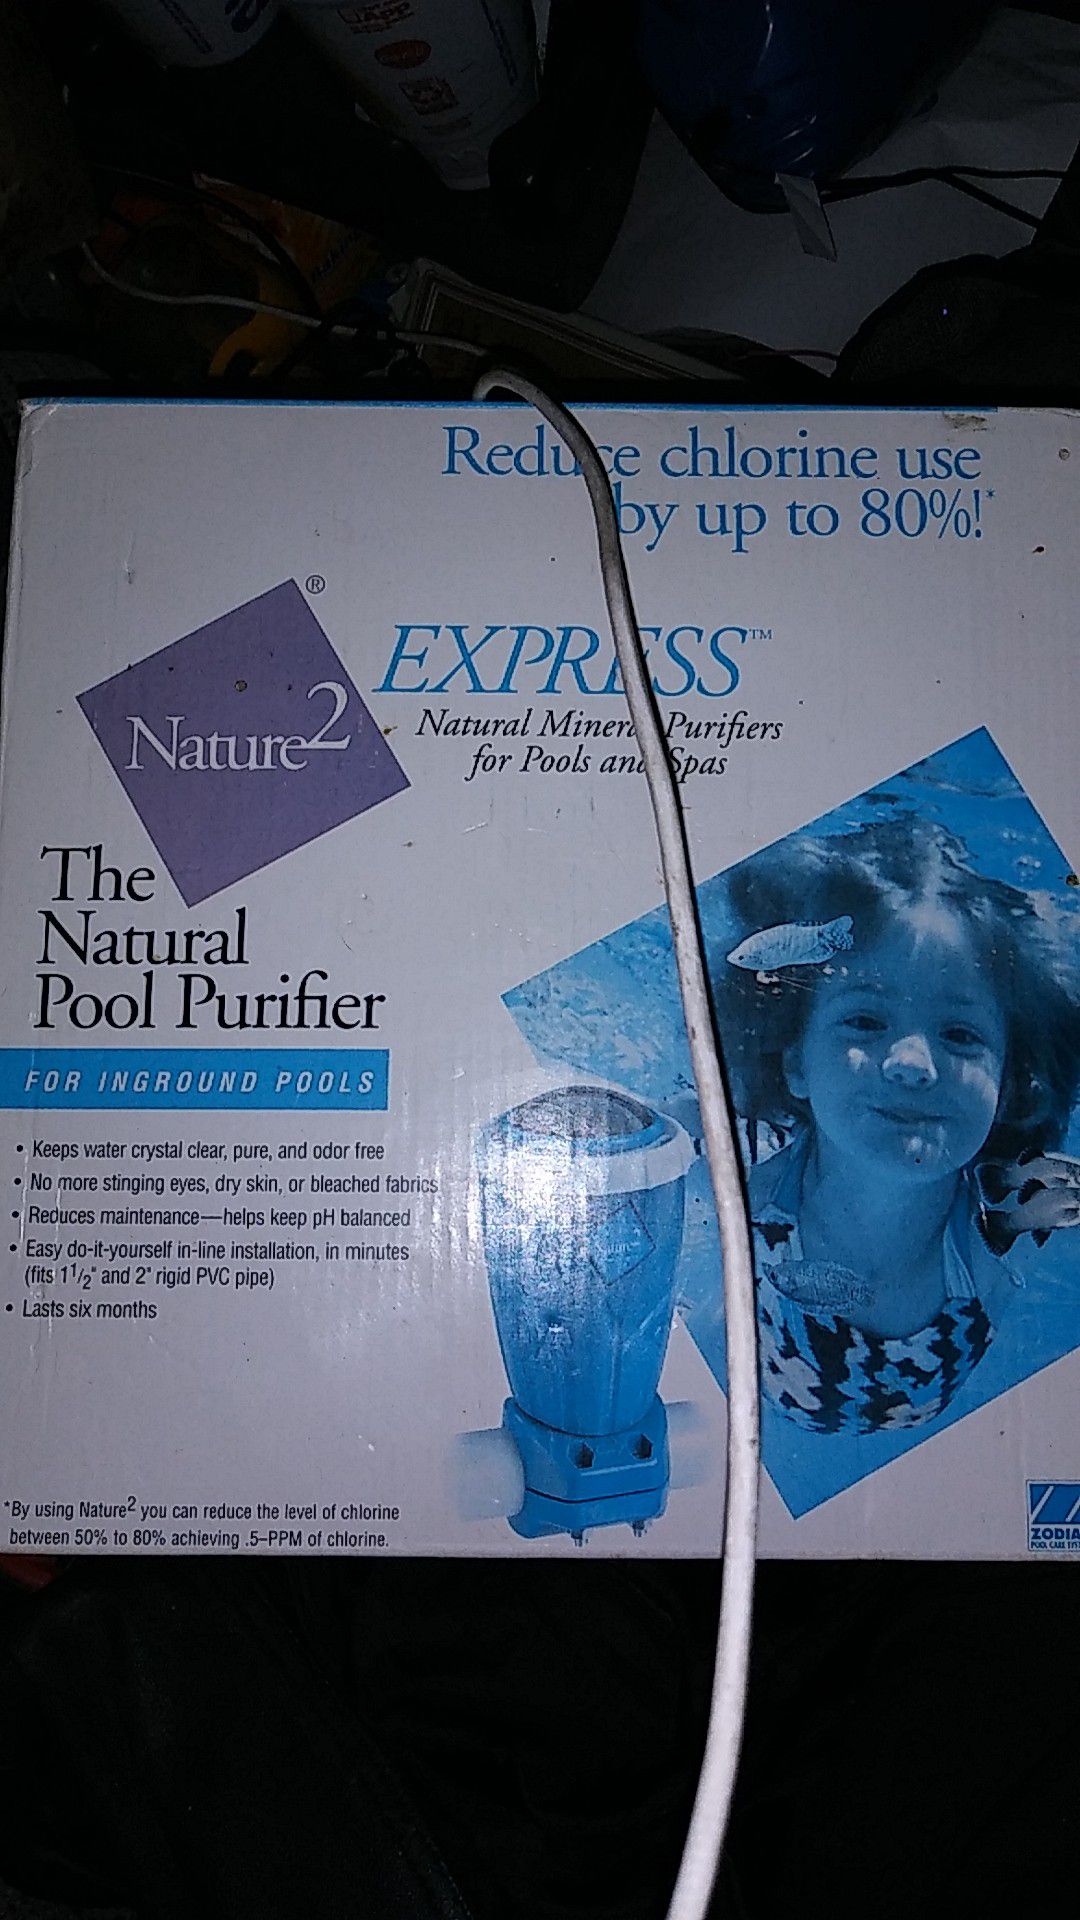 Nature 2 express natural mineral pool purifier